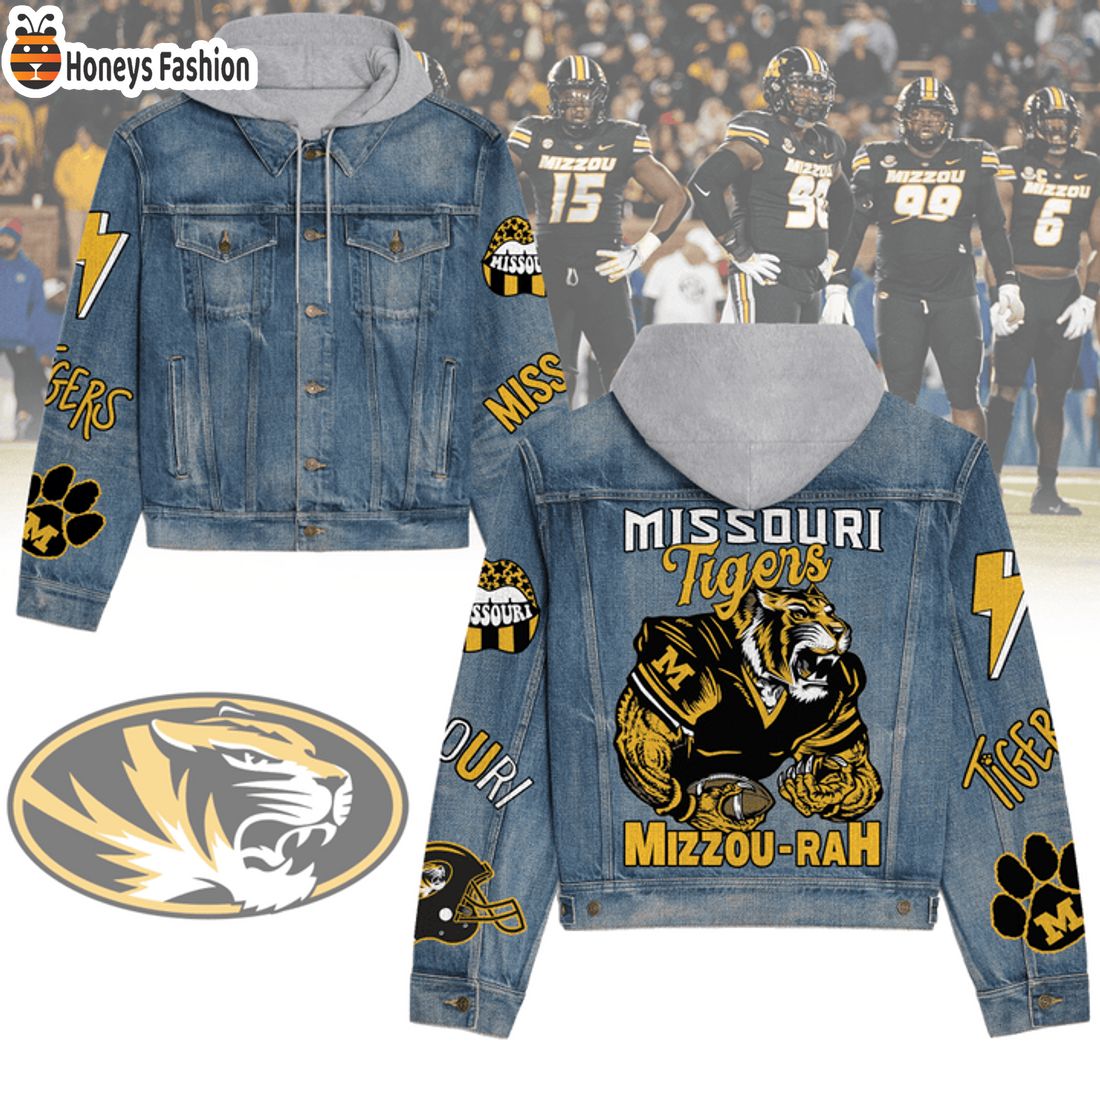 NEW Missouri Tigers Mizzou Rah Hooded Denim Jacket